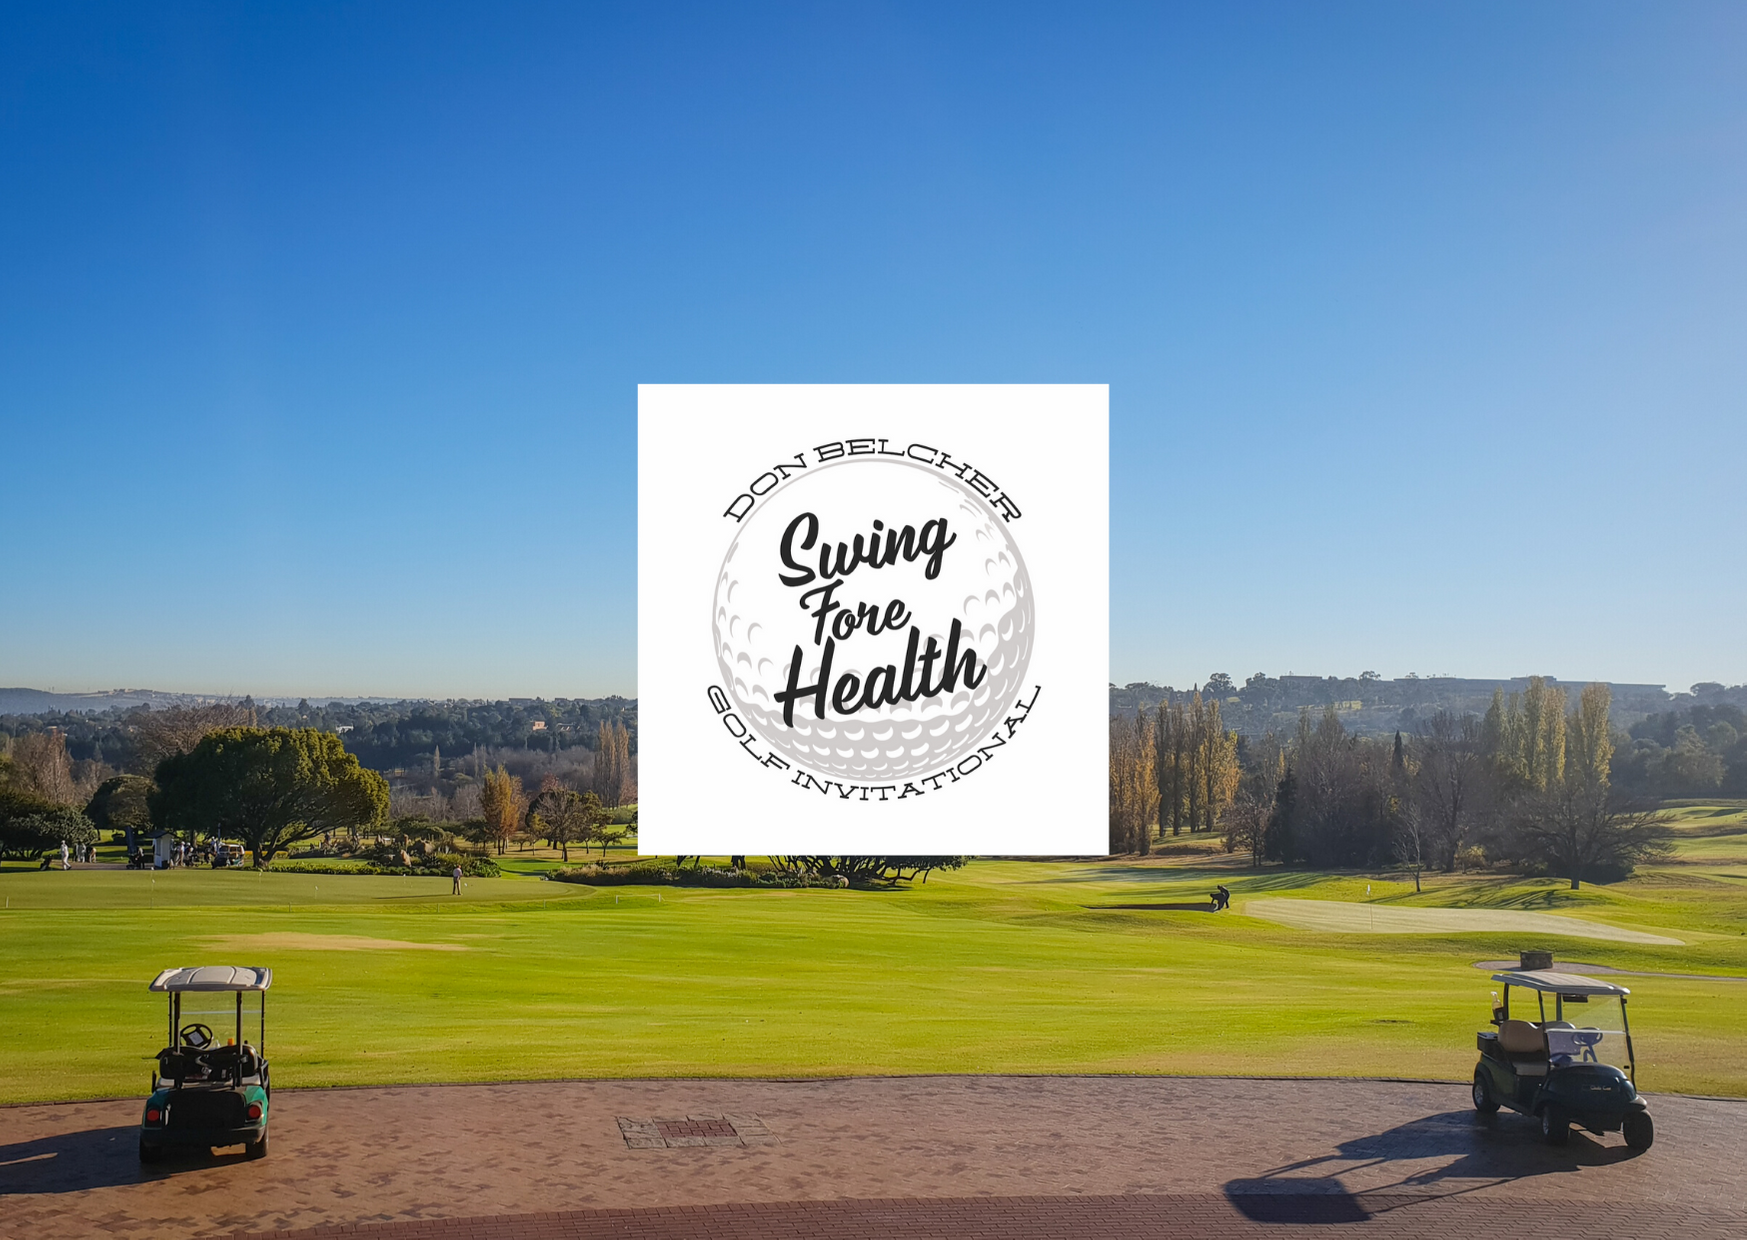 Don Belcher Swing Fore Health Golf Invitational